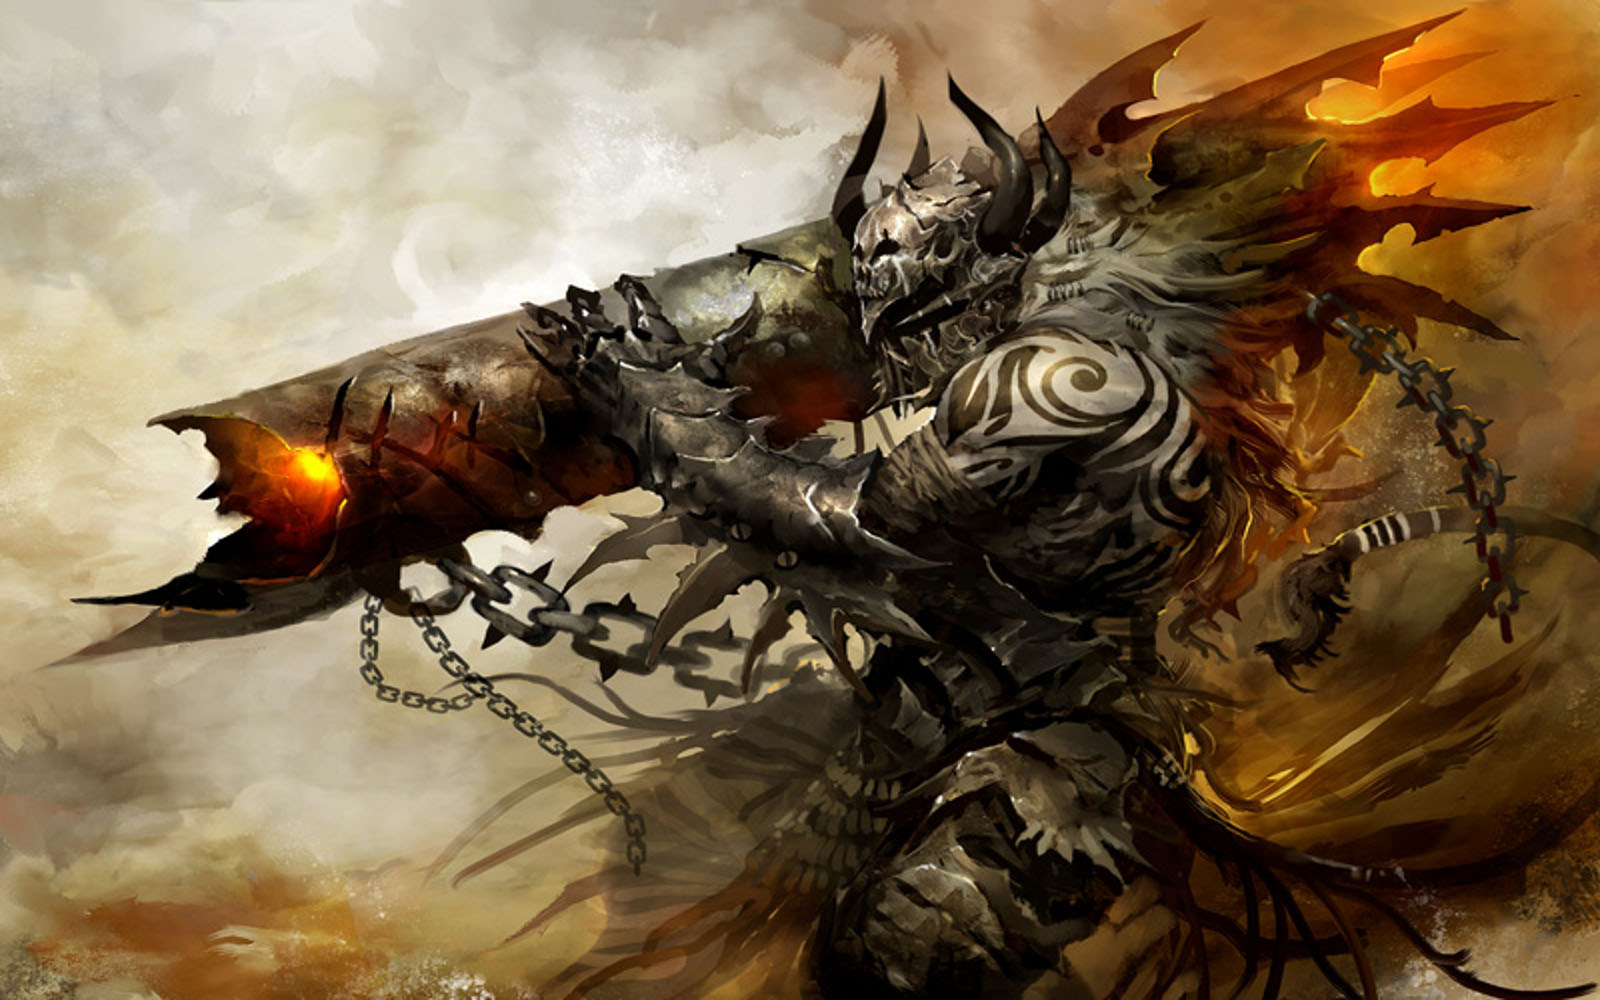 guild wars 2 wallpaper,cg artwork,mythology,dragon,fictional character,demon